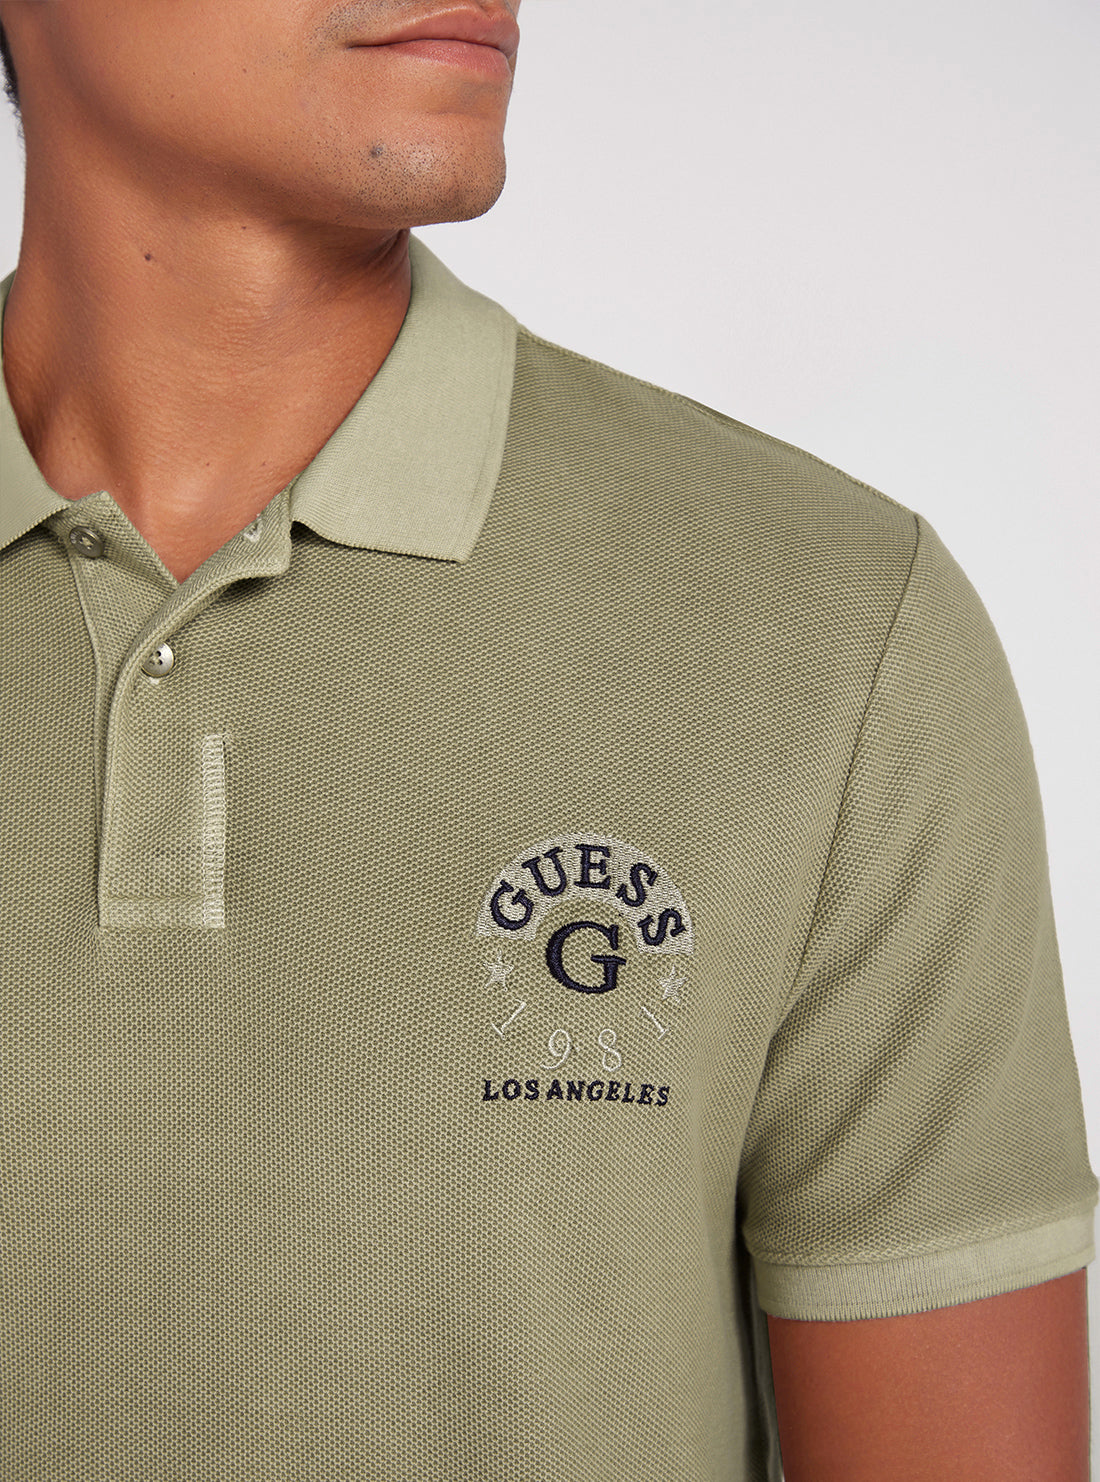 Green Ground Logo Polo T-Shirt | GUESS Men's Apparel | detail view